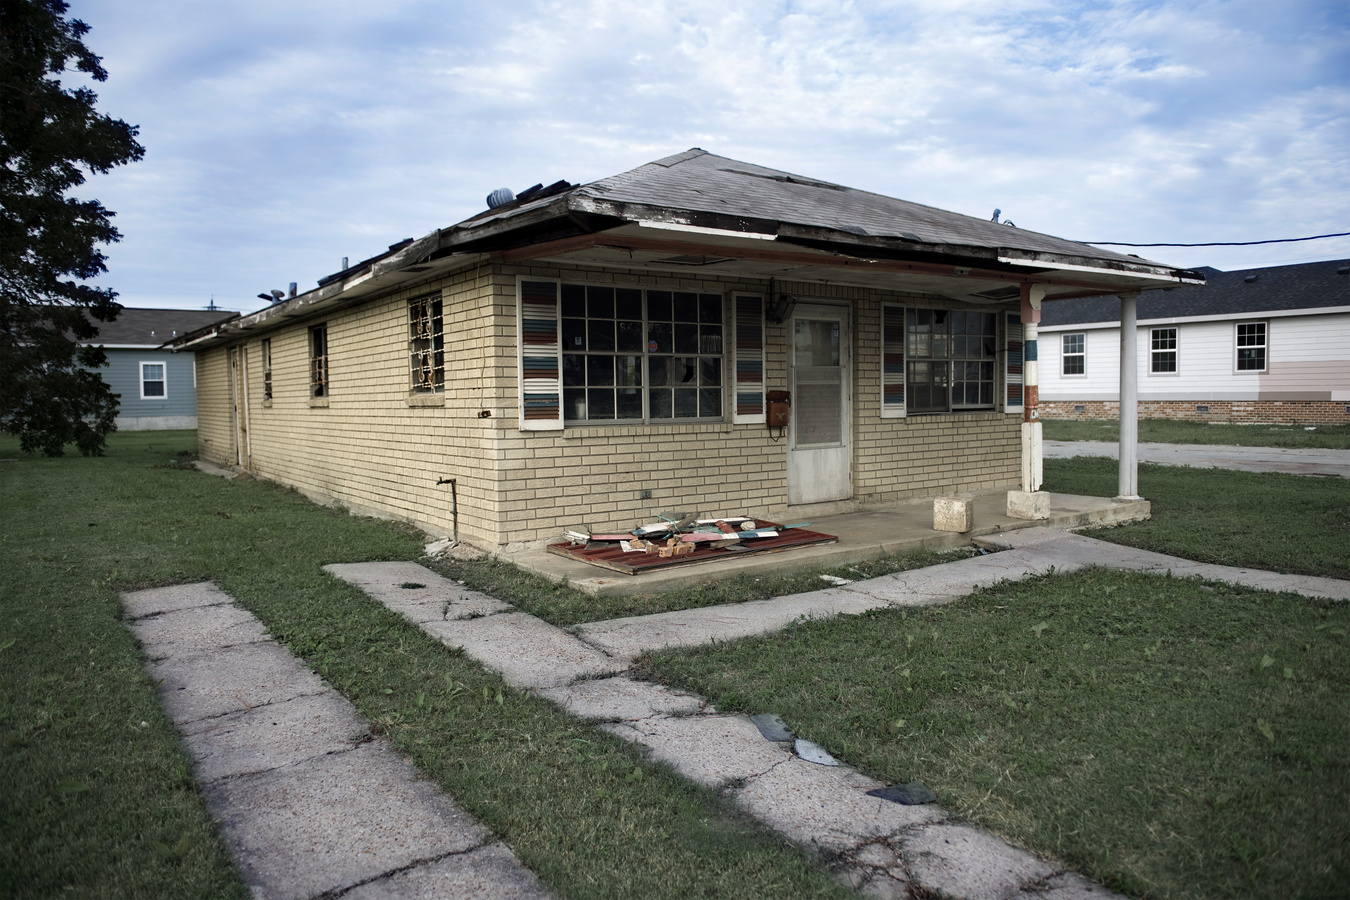 Destructed House after Hurricane Katrina, New Orleans, Louisiana